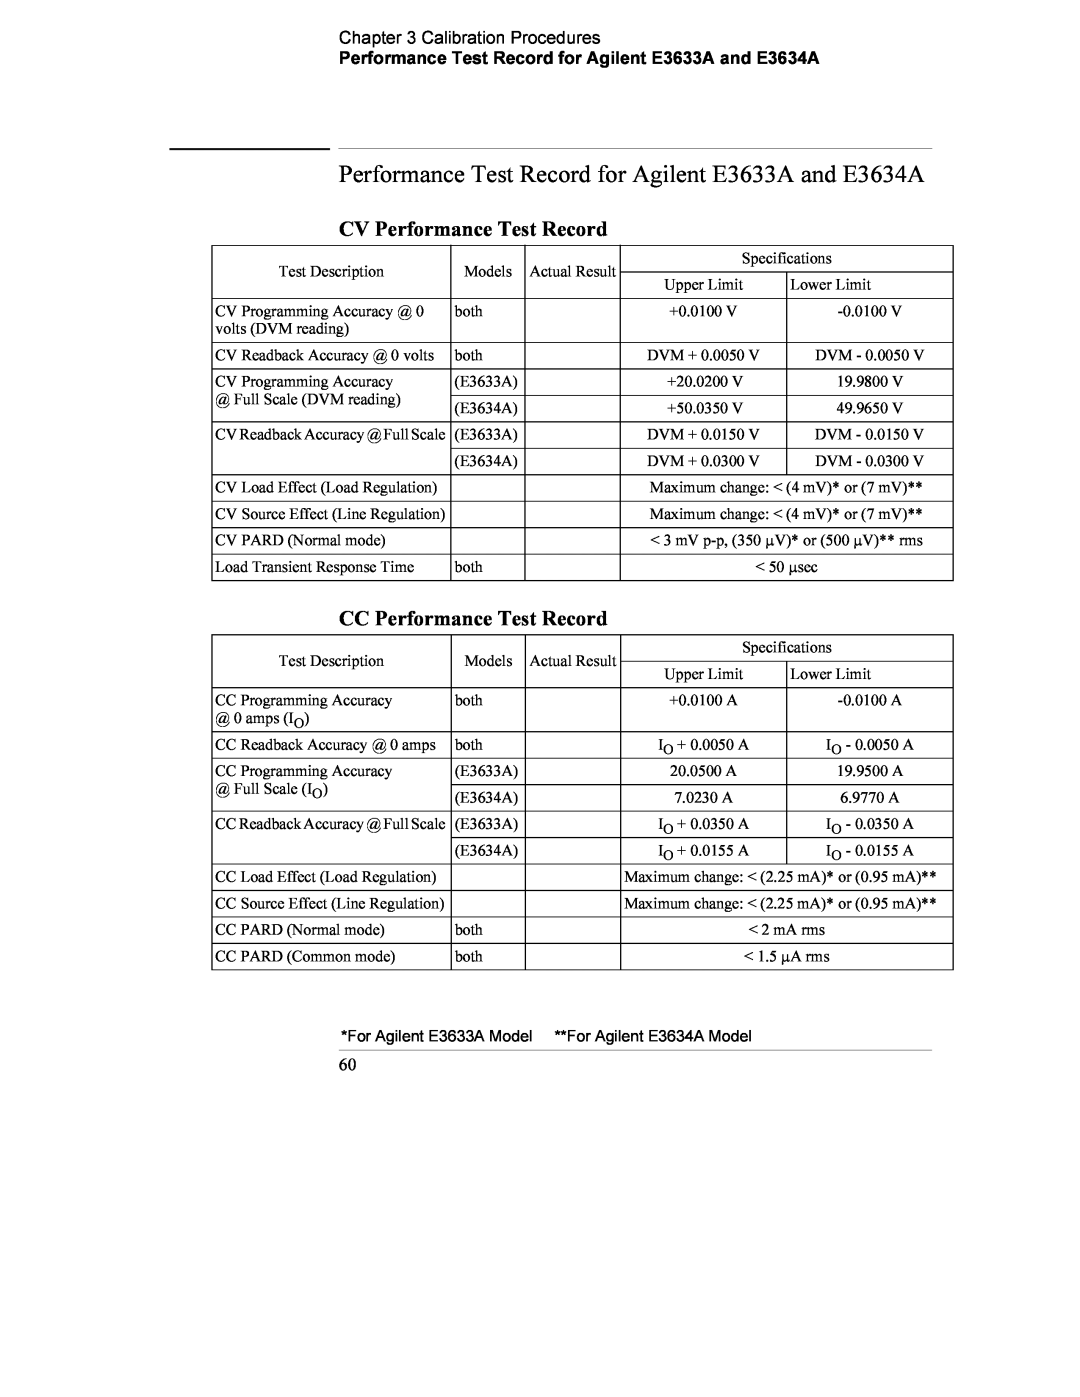 Agilent Technologies manual Performance Test Record for Agilent E3633A and E3634A, CV Performance Test Record 